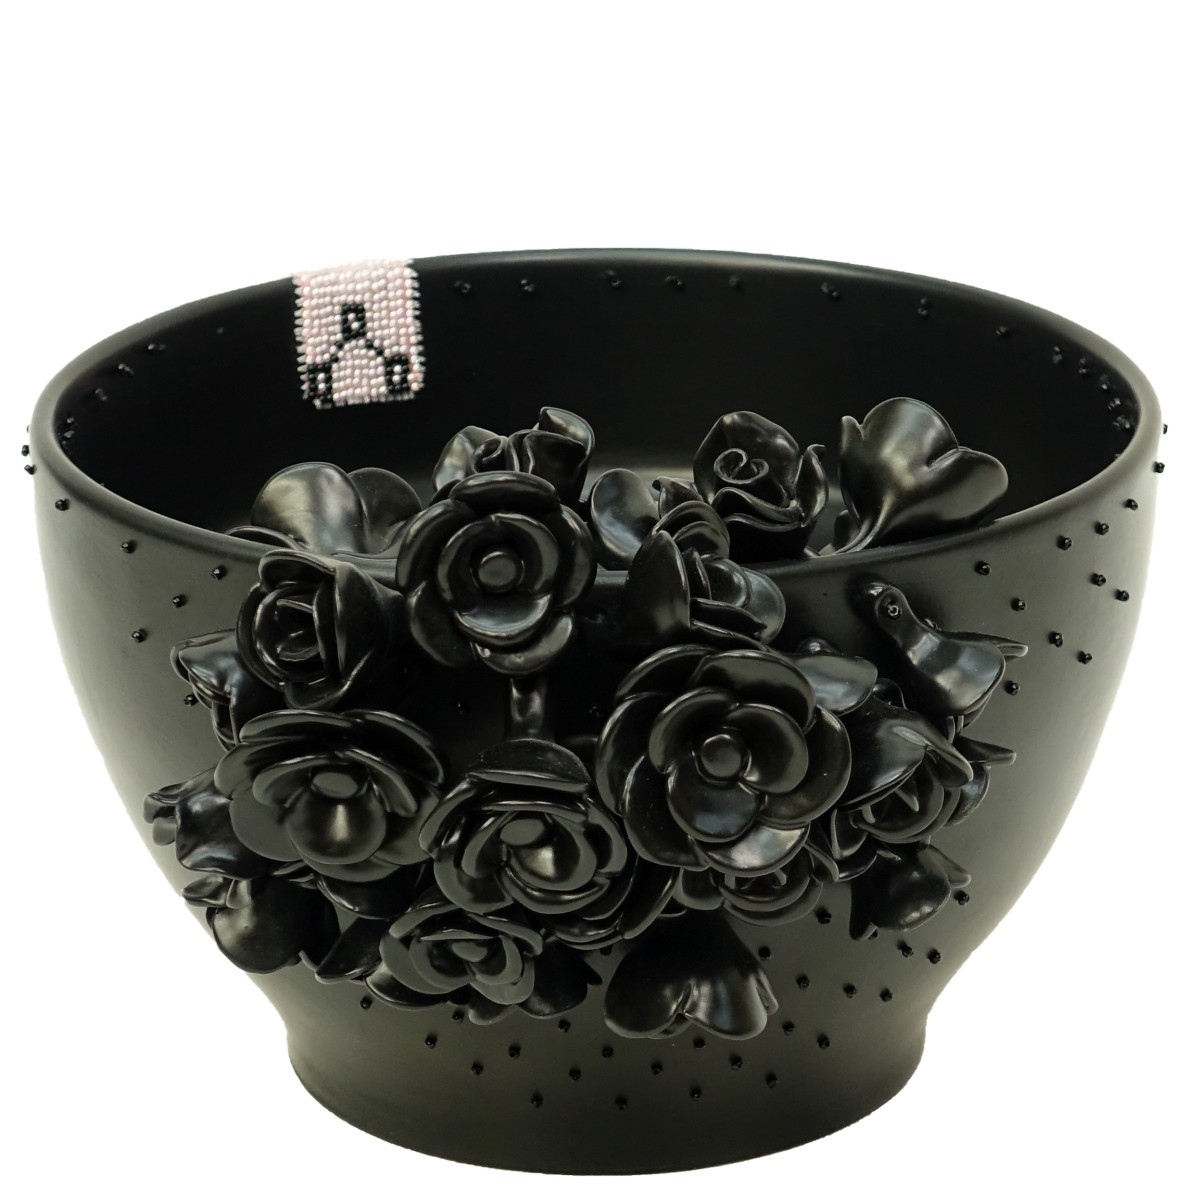 Artnenica Black Ceramic Bowl